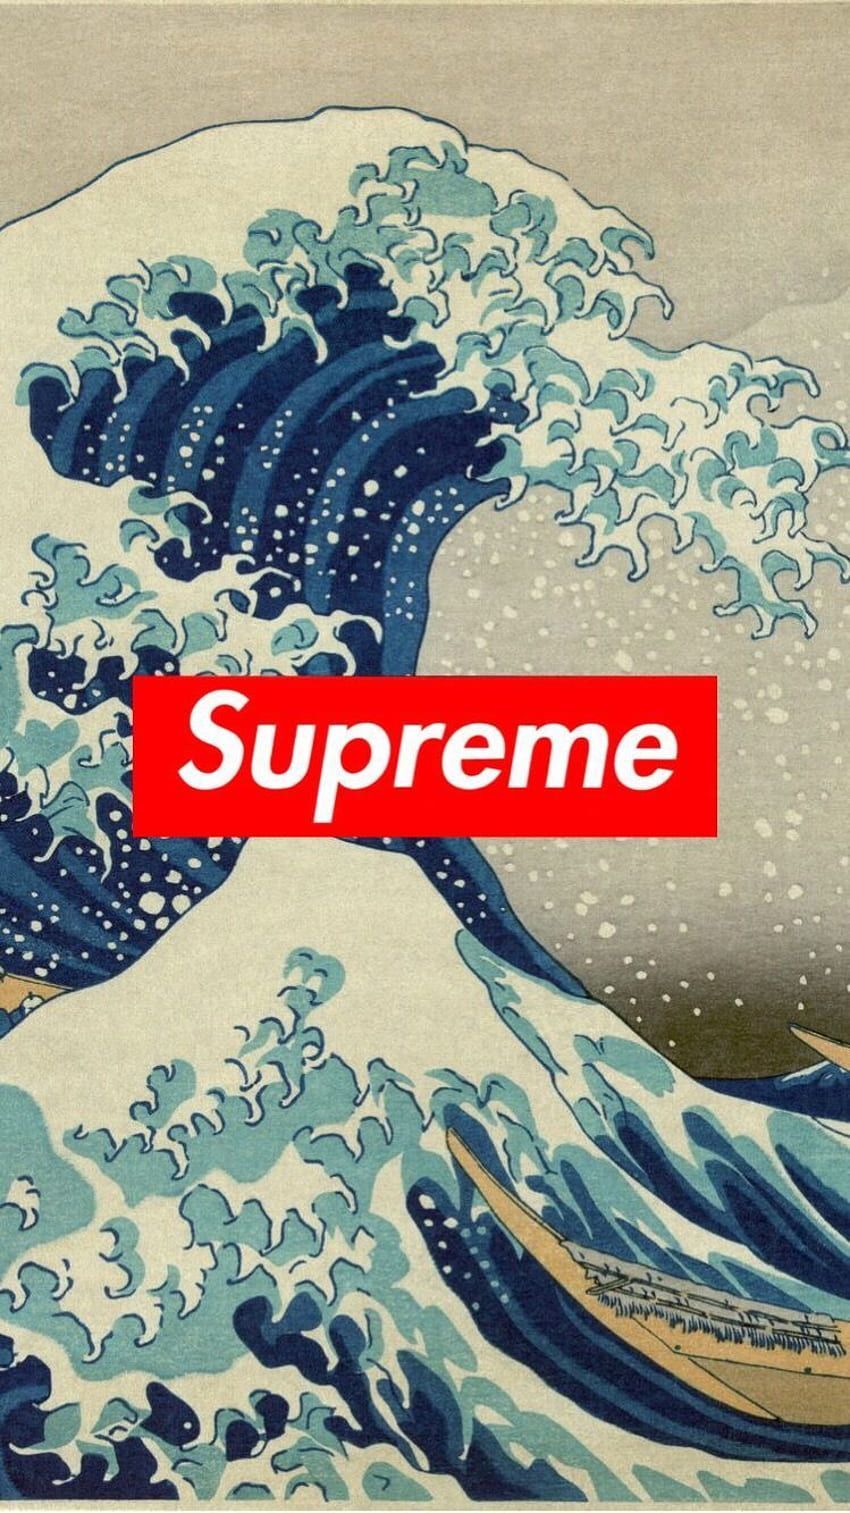 Supreme wallpaper I made for my phone - Supreme, The Great Wave off Kanagawa